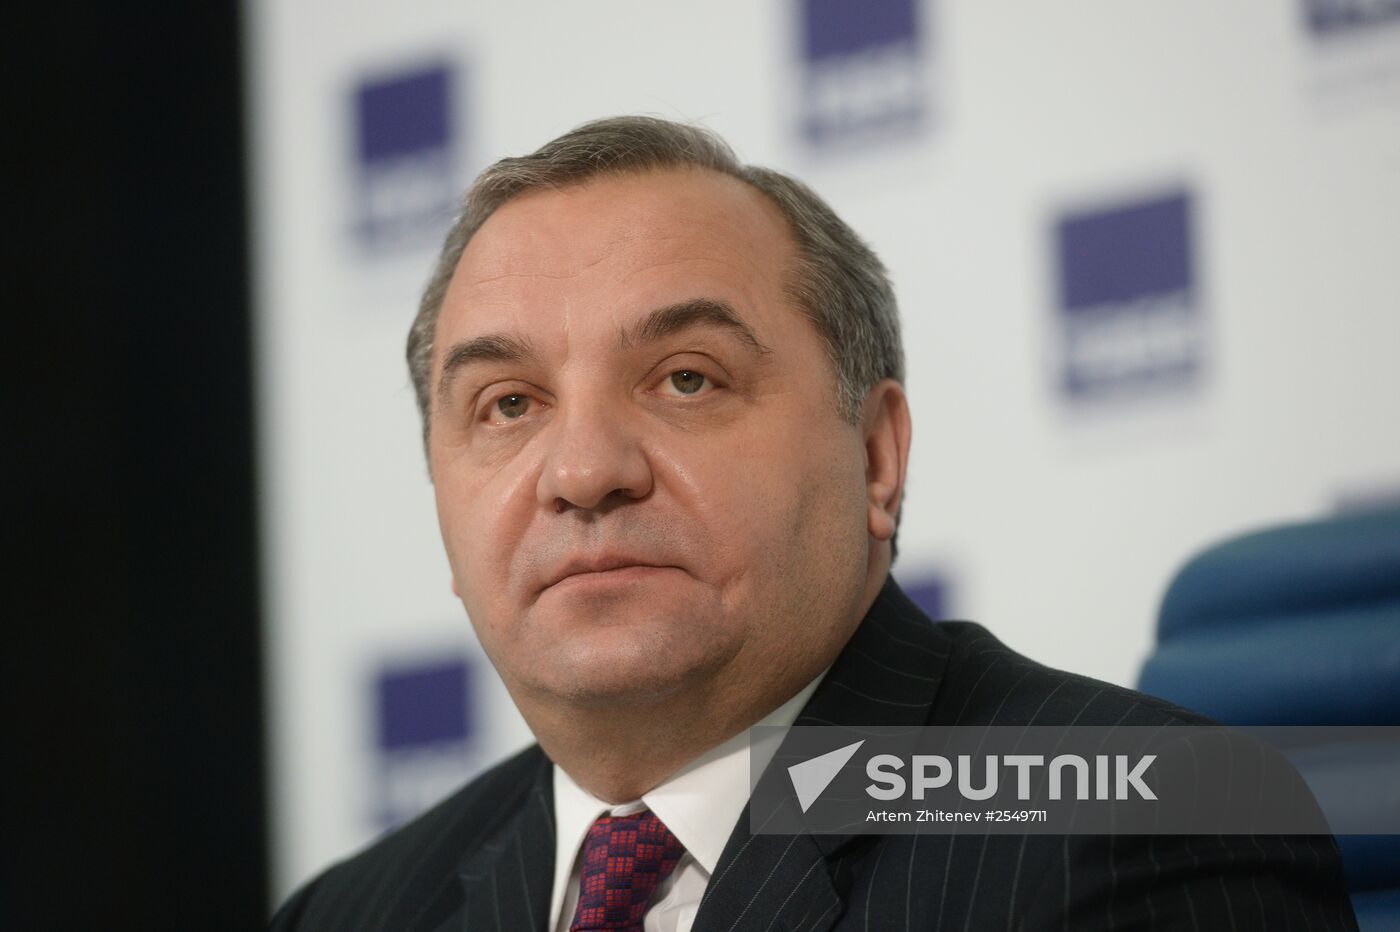 Press conference of Emergencies Minister Vladimir Puchkov